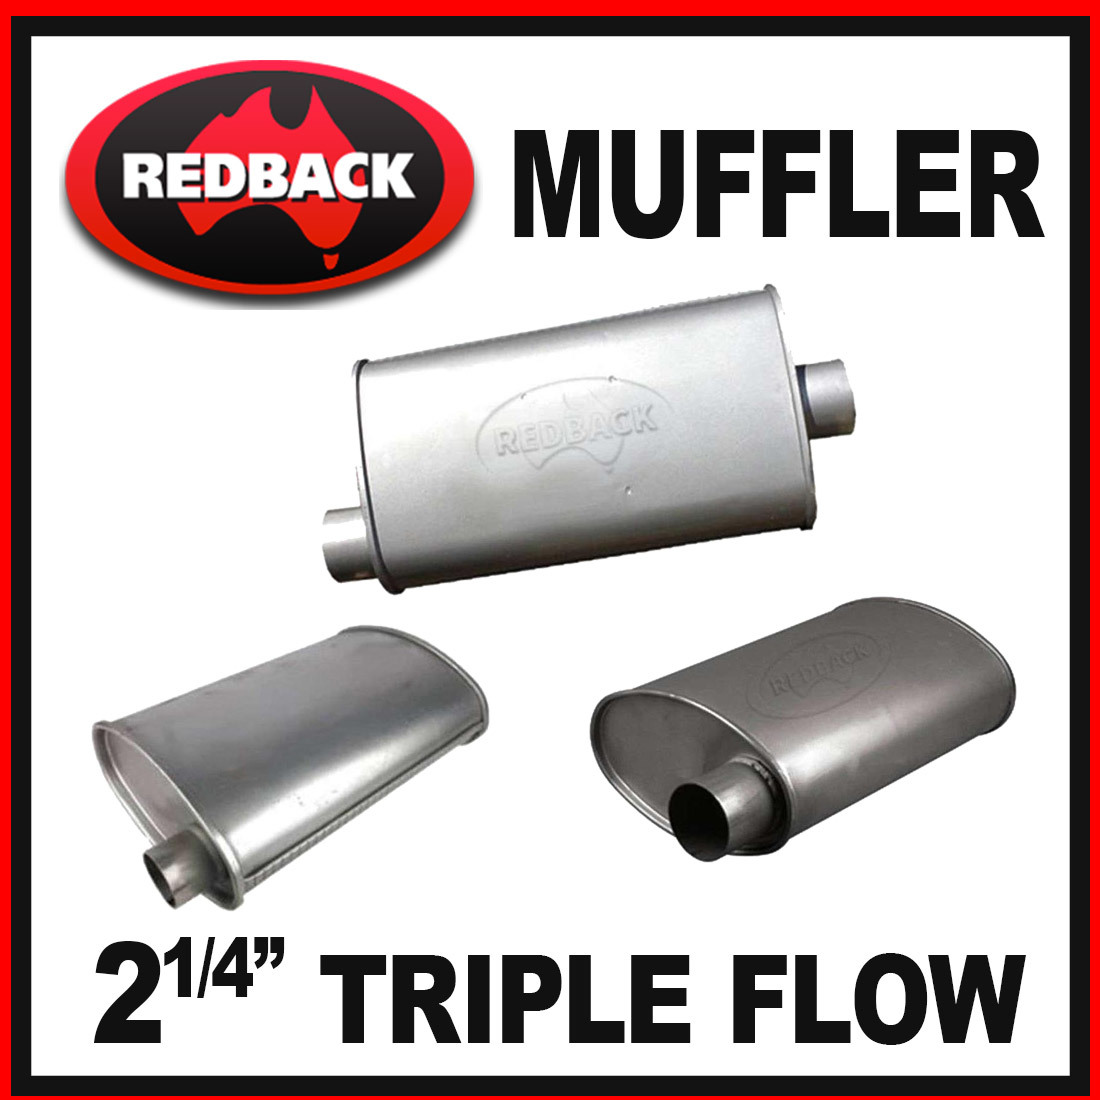 Redback 2 1/4" Triple Flow Muffler image